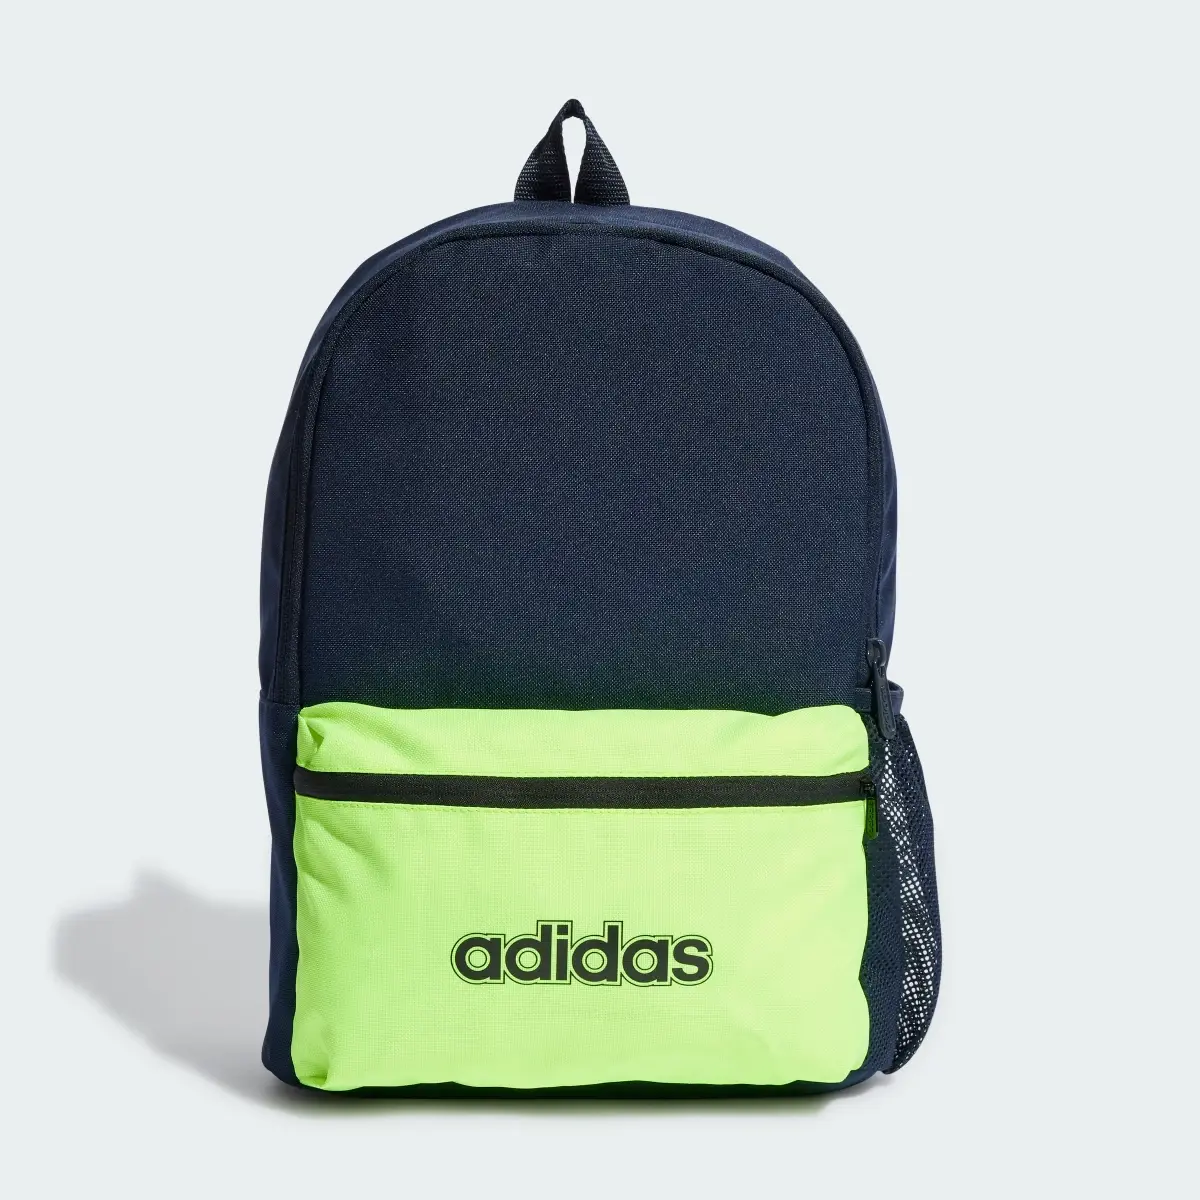 Adidas Graphic Rucksack. 2